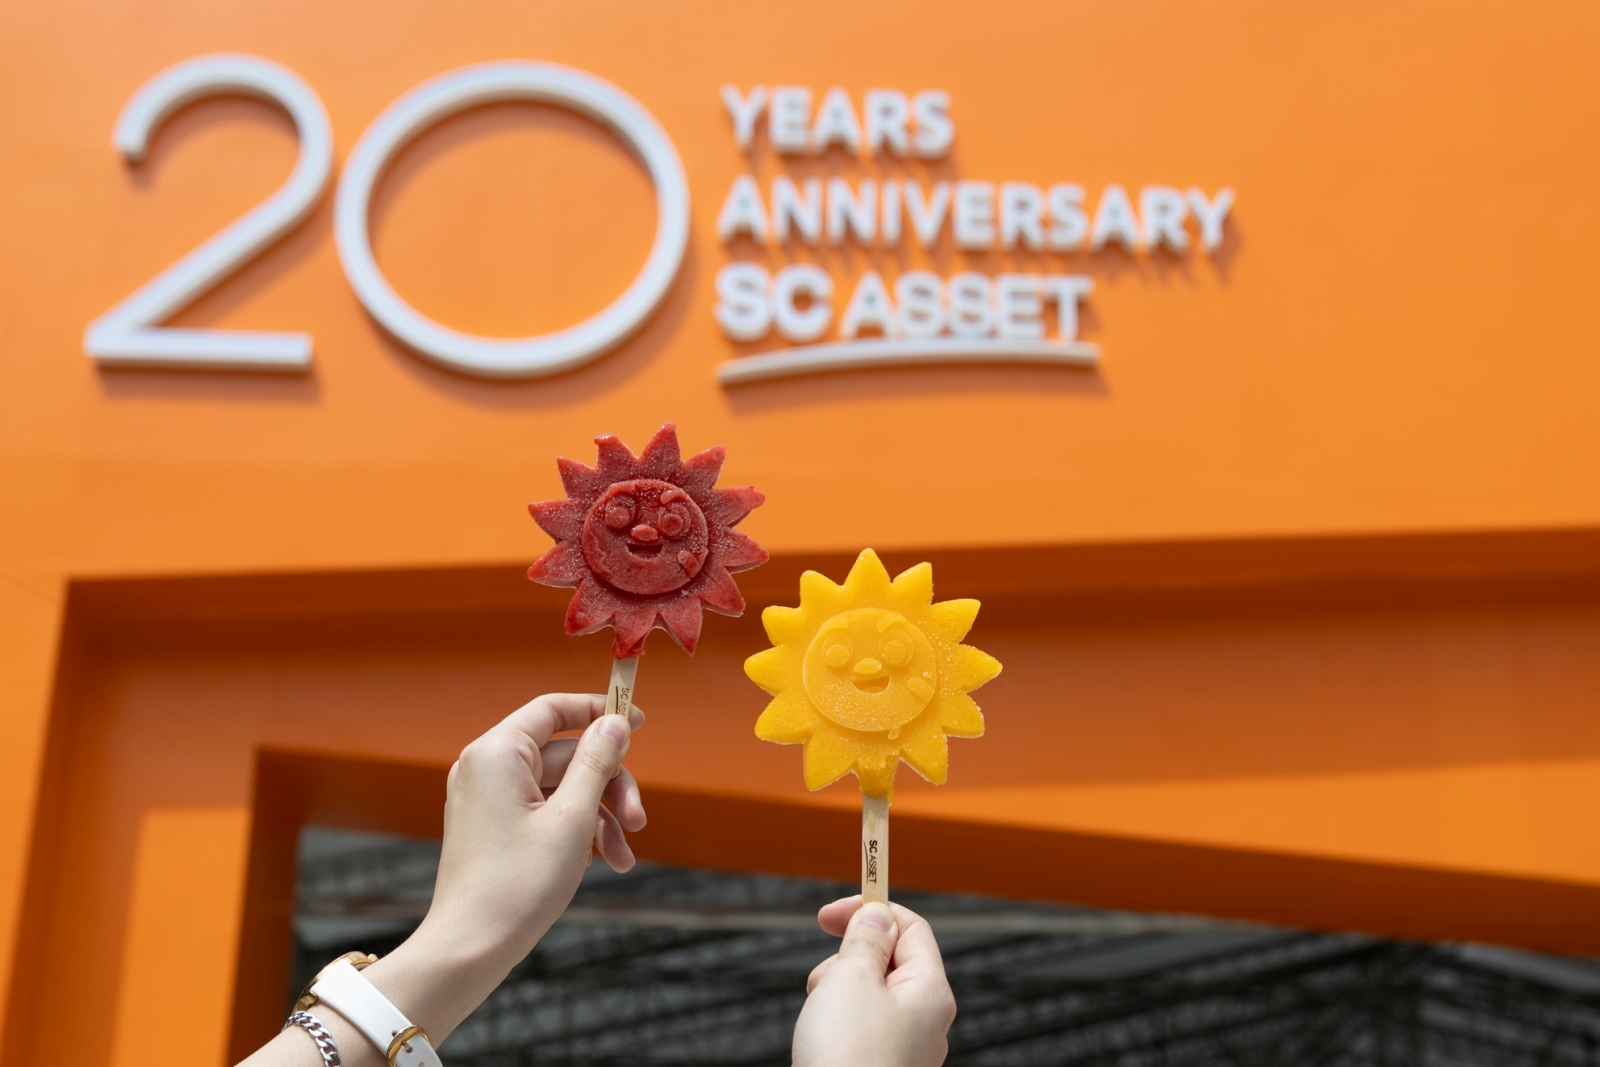 SC Asset จัดงาน “20 Years of Good Mornings” ฉลองก้าวสู่ทศวรรษที่ 3 อย่างยิ่งใหญ่  เนรมิตสวนทานตะวันสีส้มสดใสใจกลางกรุง 